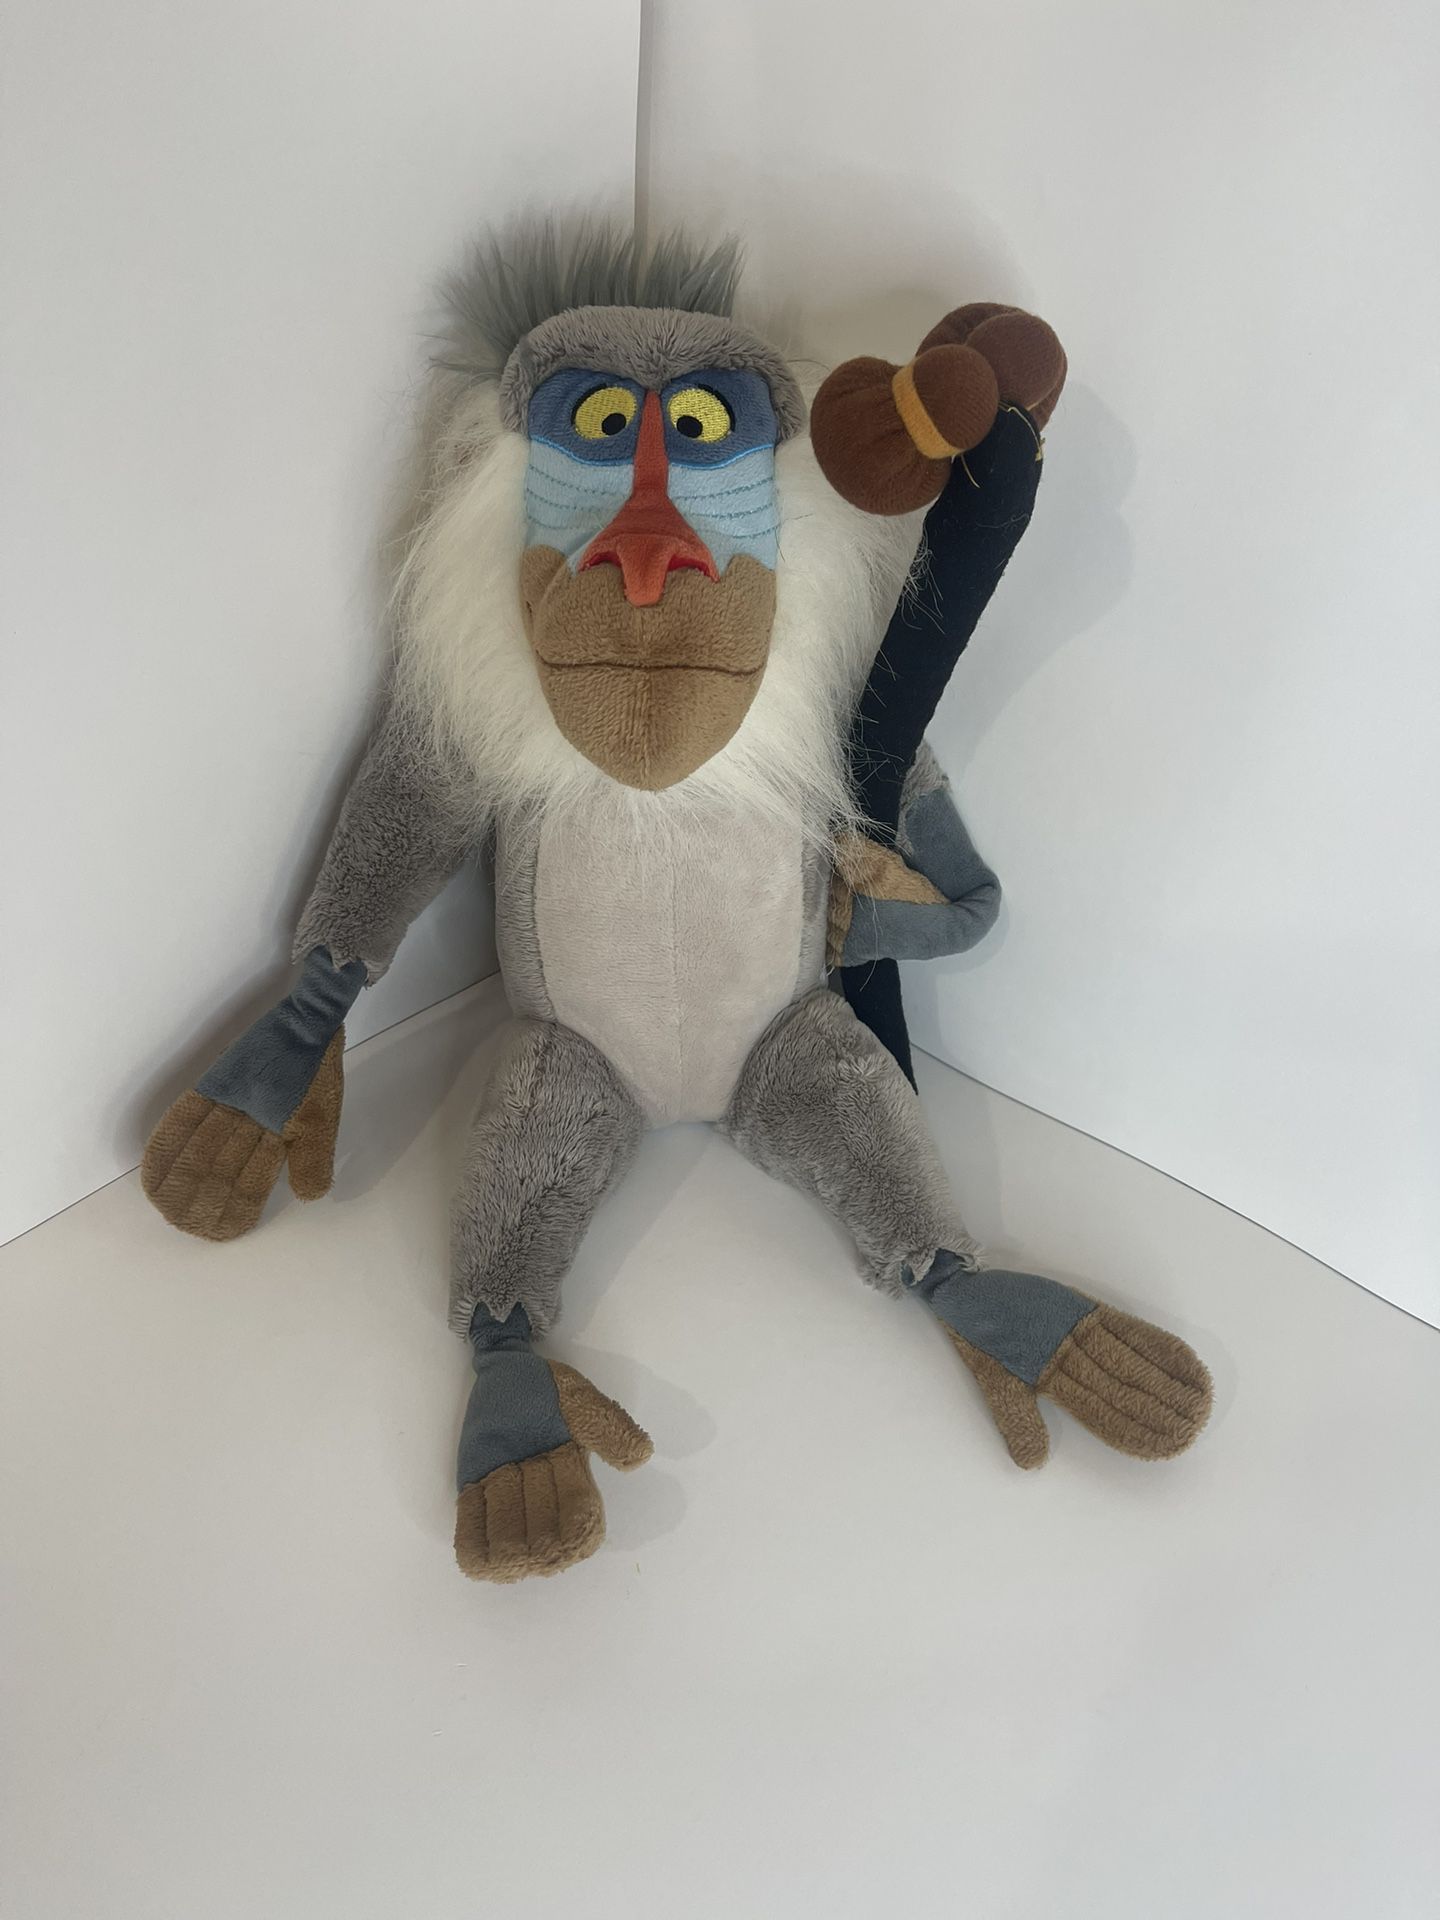 Disney Store Rafiki Plush The Lion King Stuffed Monkey Baboon Animal Toy 15"